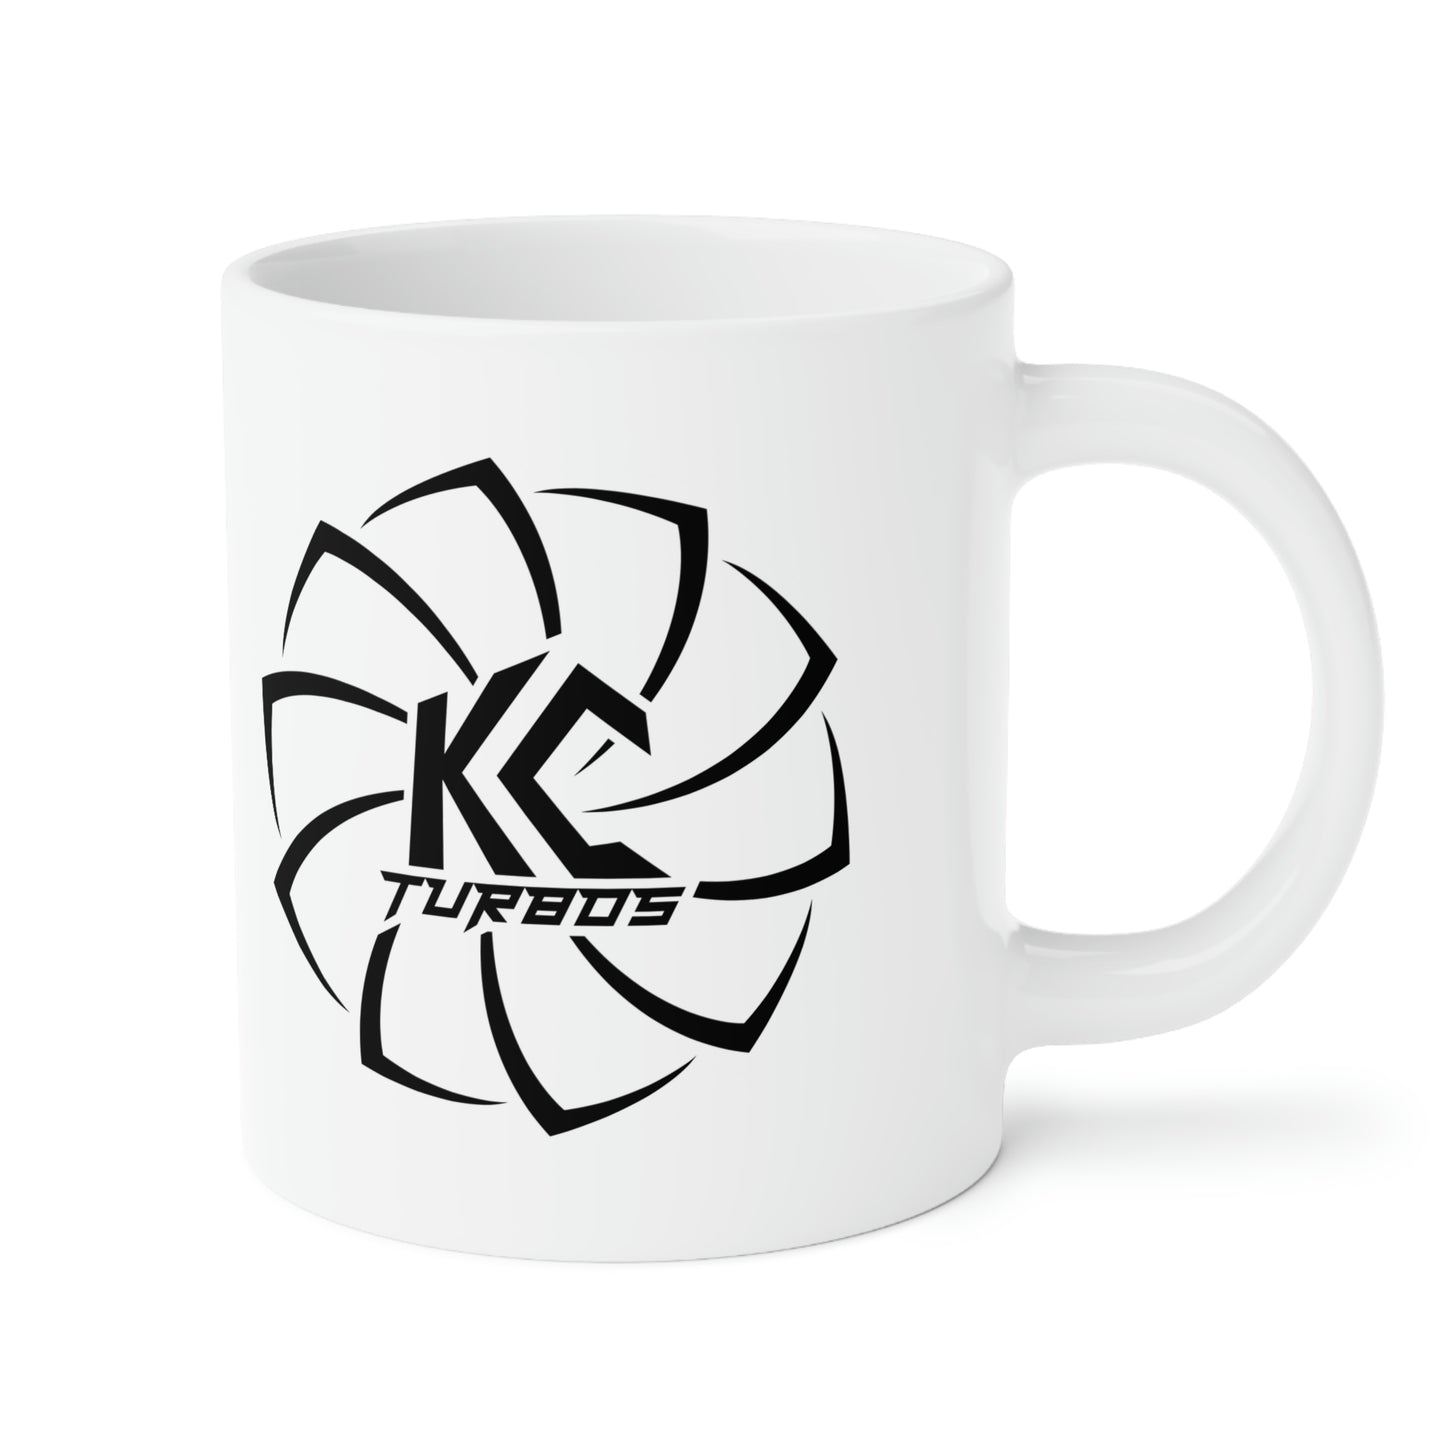 World's Best Turbo Coffee Mug - 2024